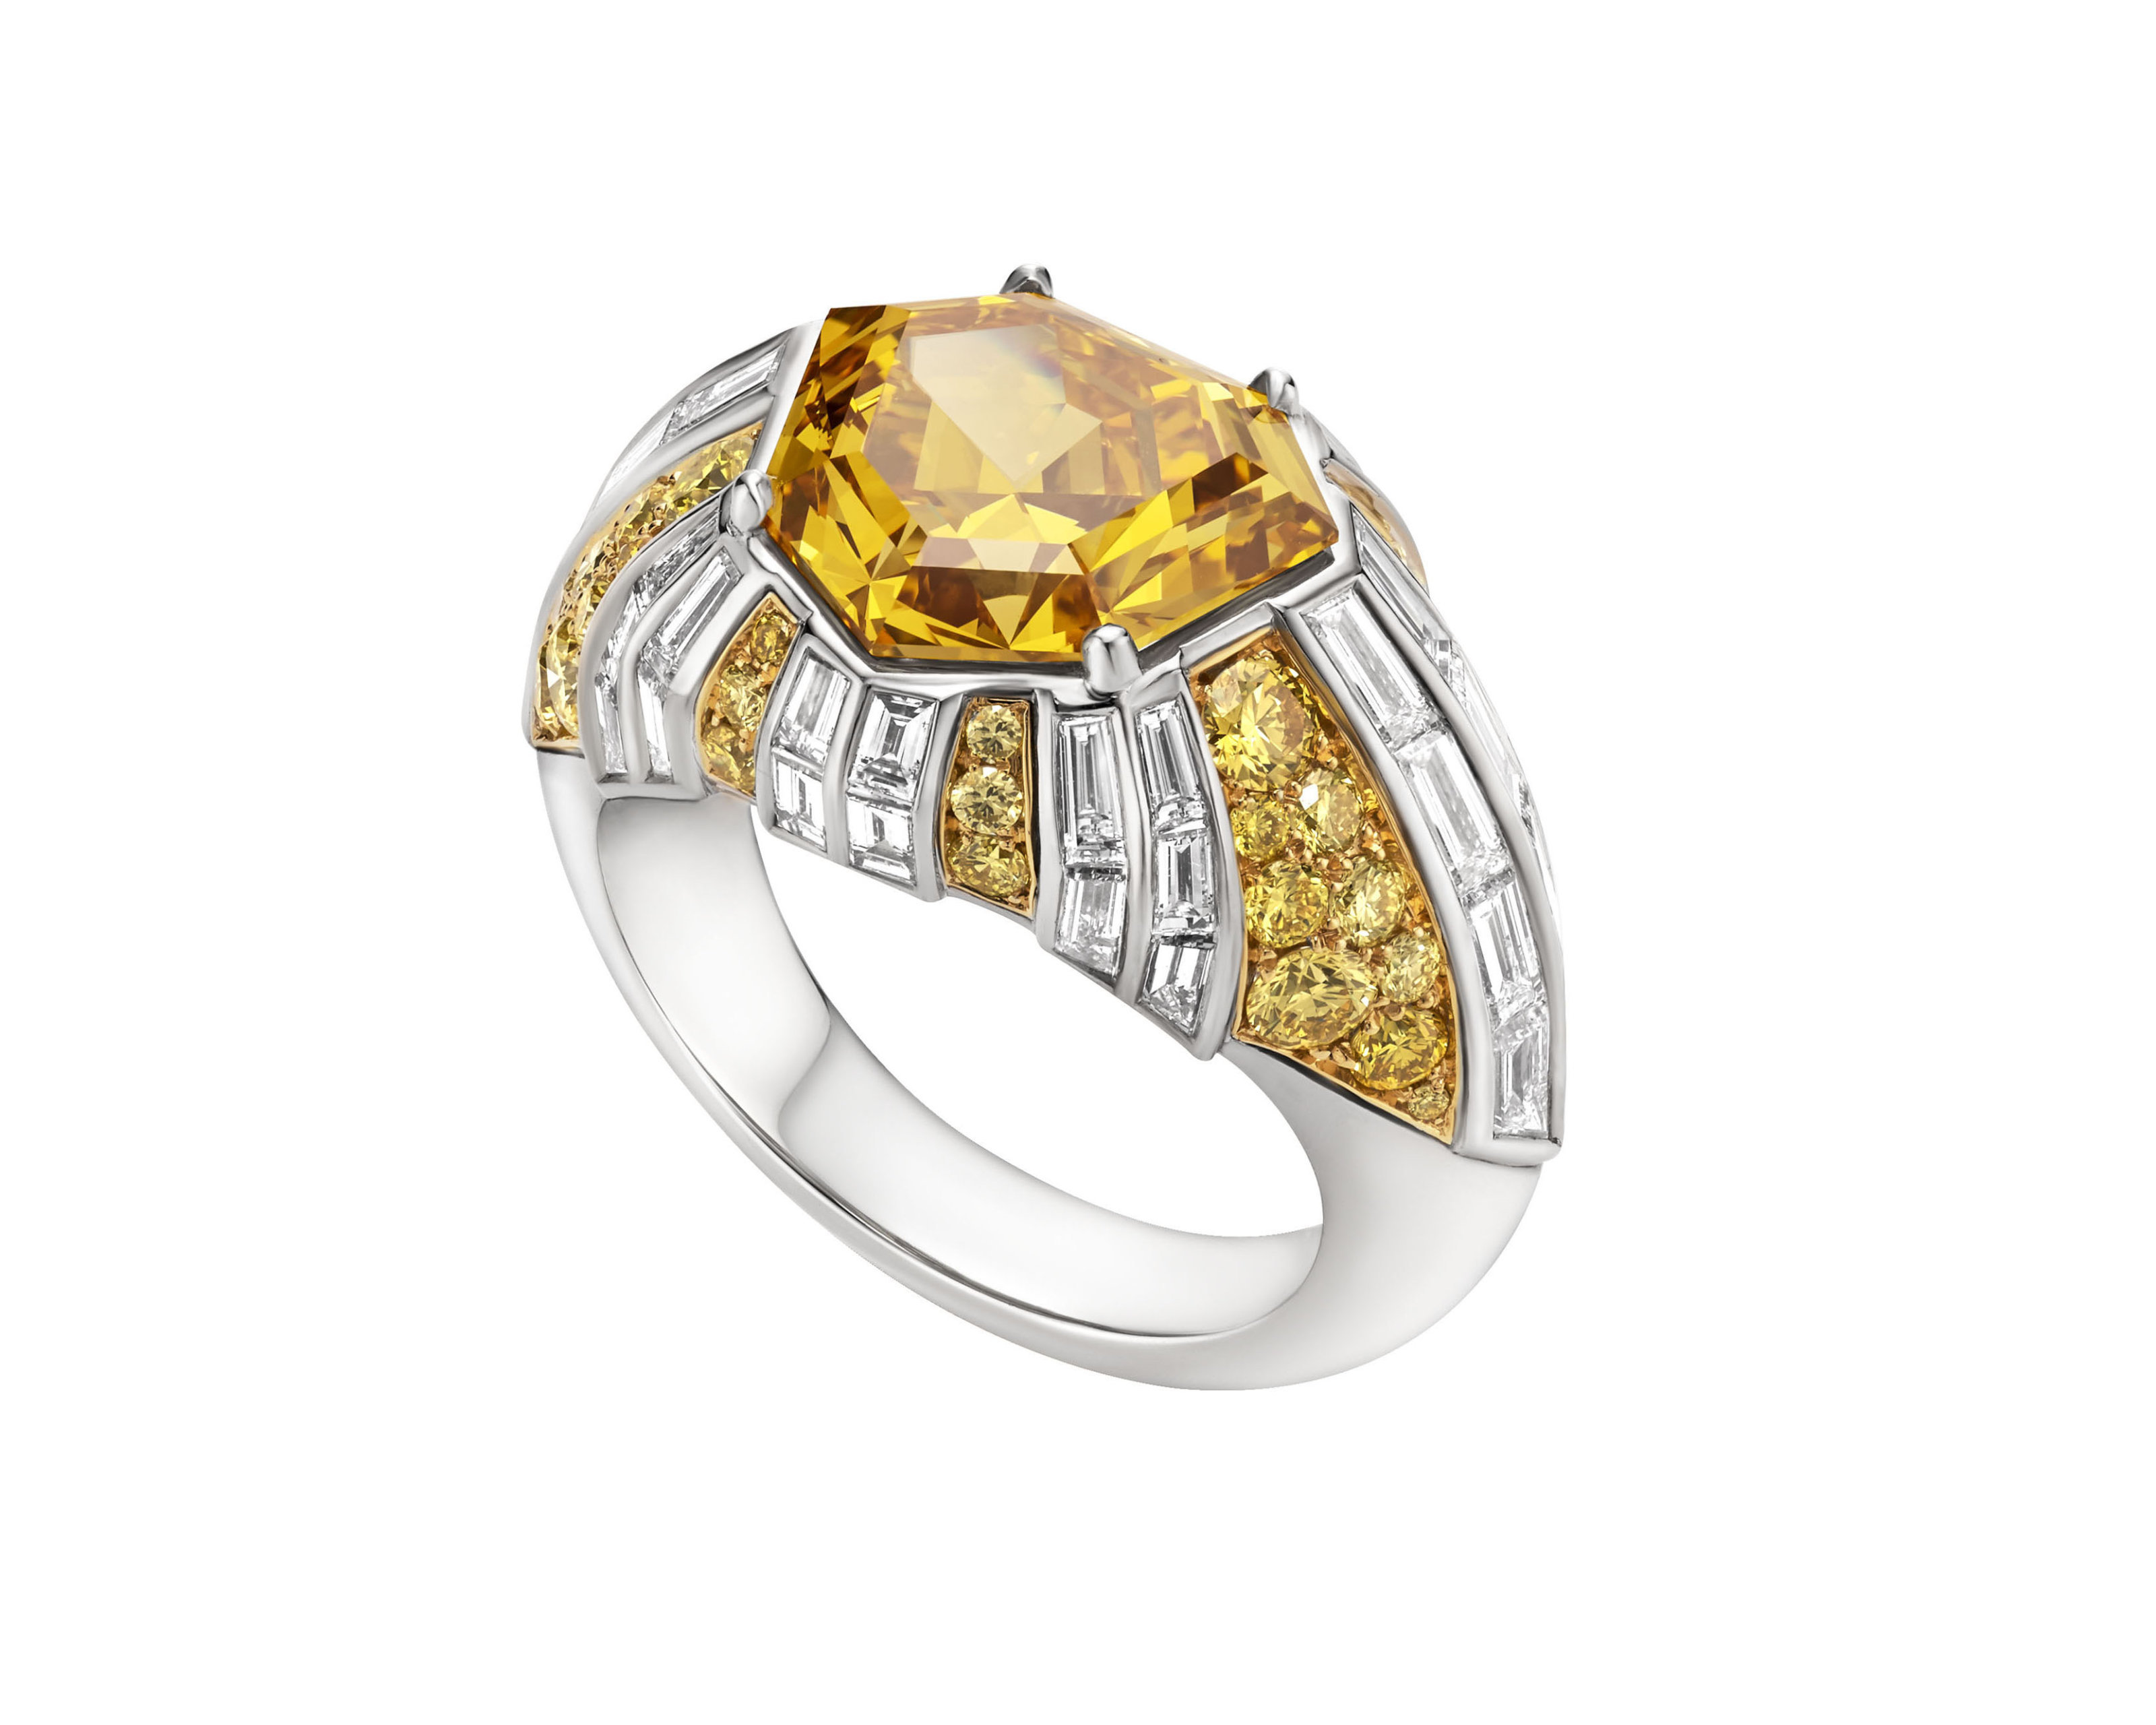 Fancy cut orange-yellow diamond with orange-yellow round cut diamond accents & baguette diamonds by Bvlgari jewelry